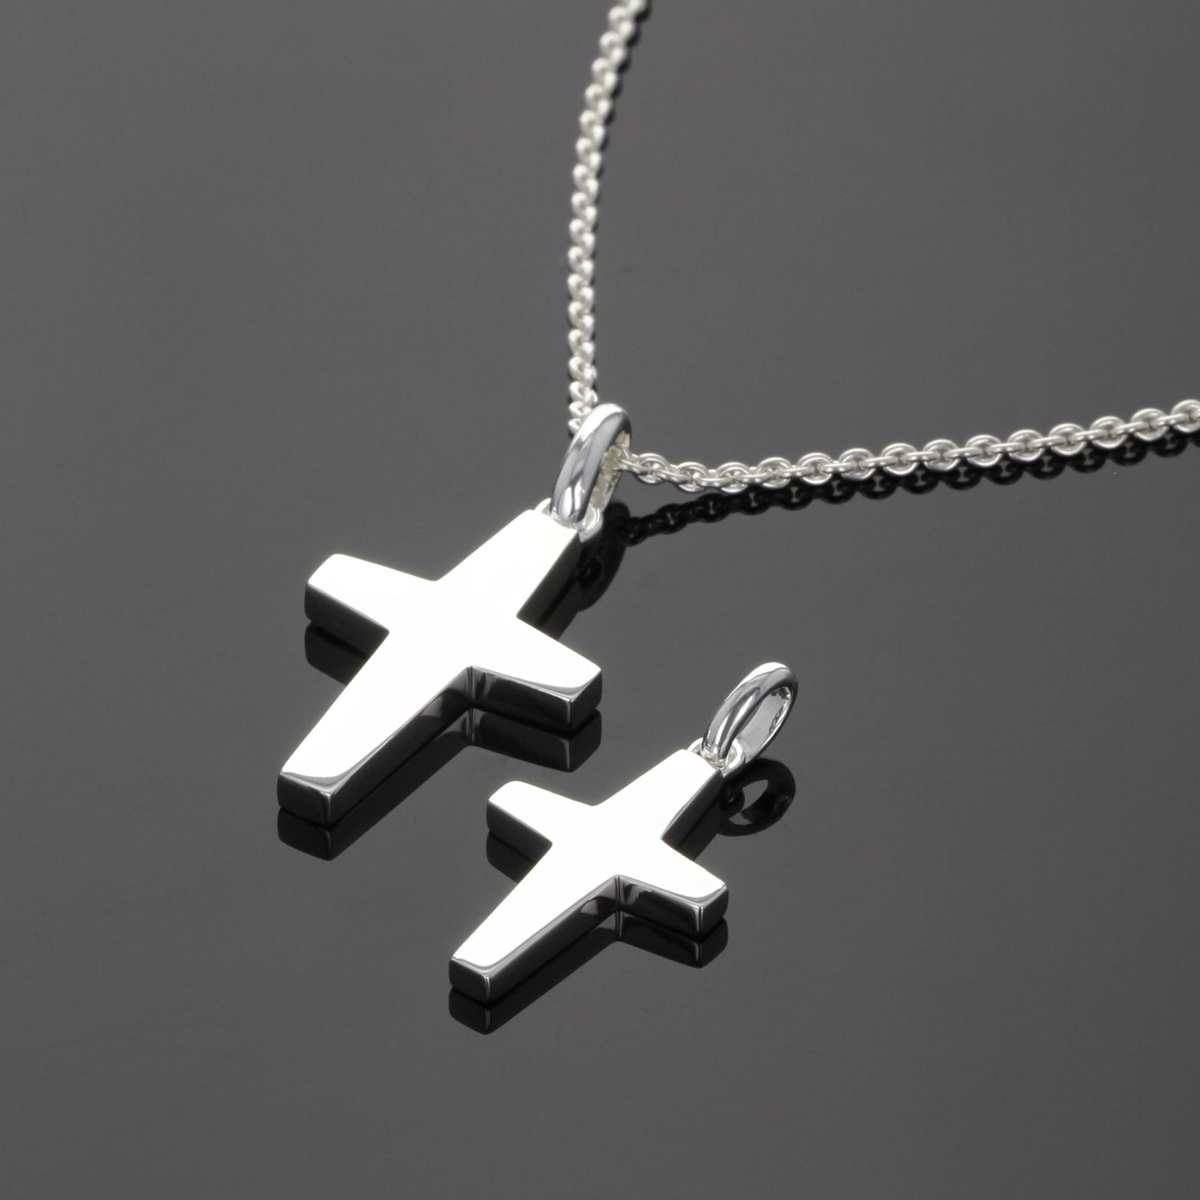 Polished sterling silver cross pendants